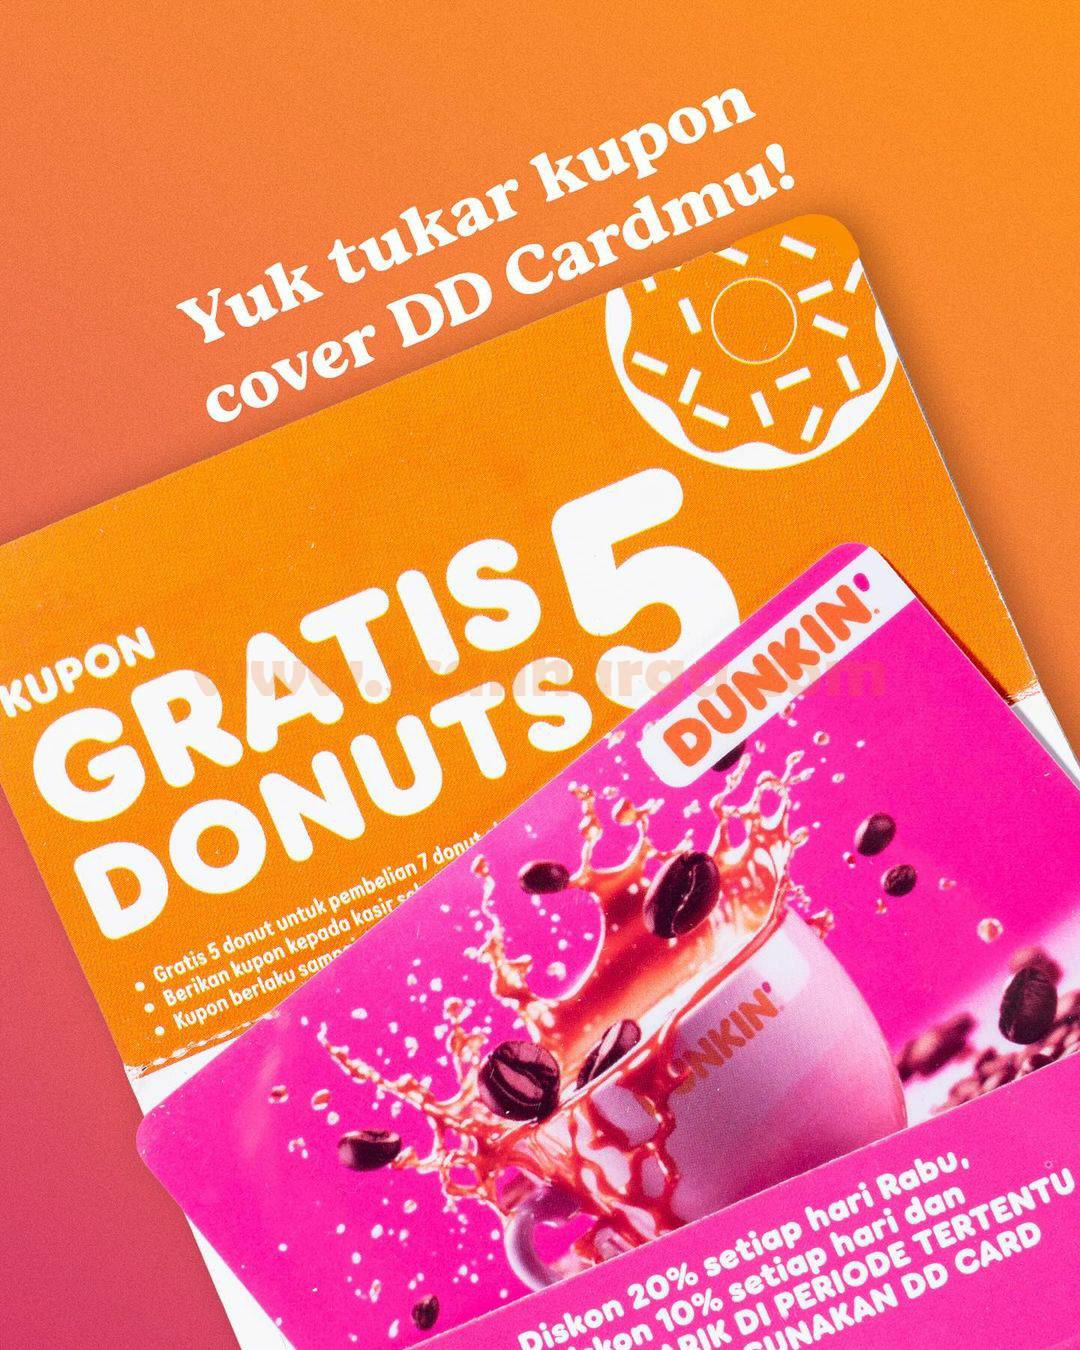 Promo Dunkin Donuts DD Card - Kupon Gratis 5 Donuts